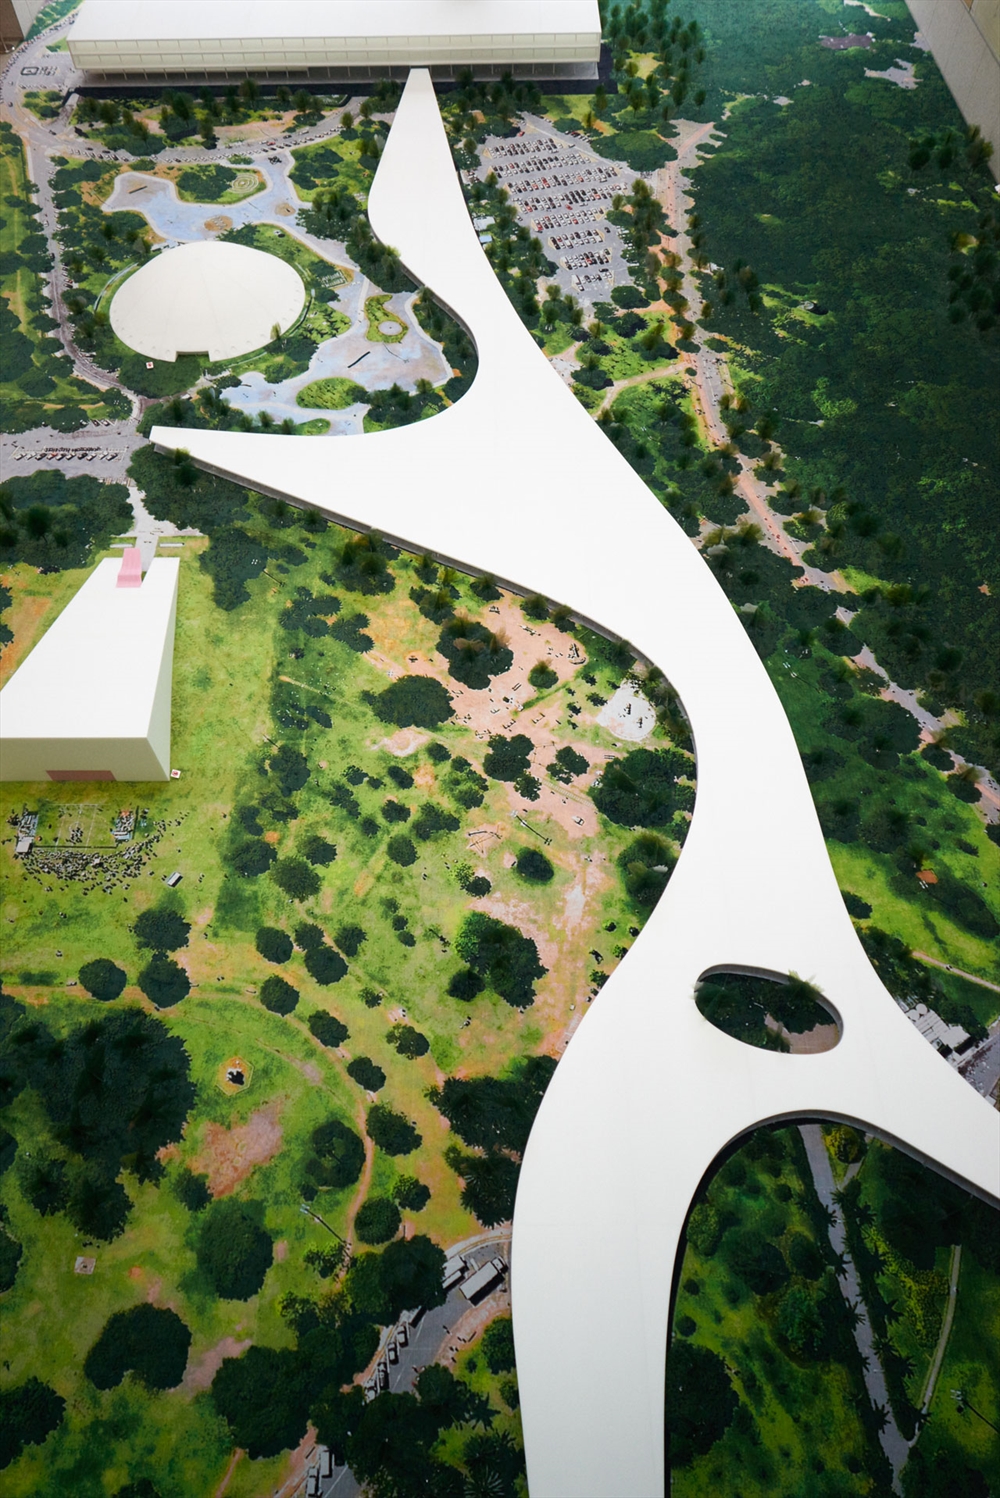 Archisearch - Oscar Niemeyer: The Man Who Built Brasilia / Museum of Contemporary Art Tokyo / Photography by Yasuyuki Emori